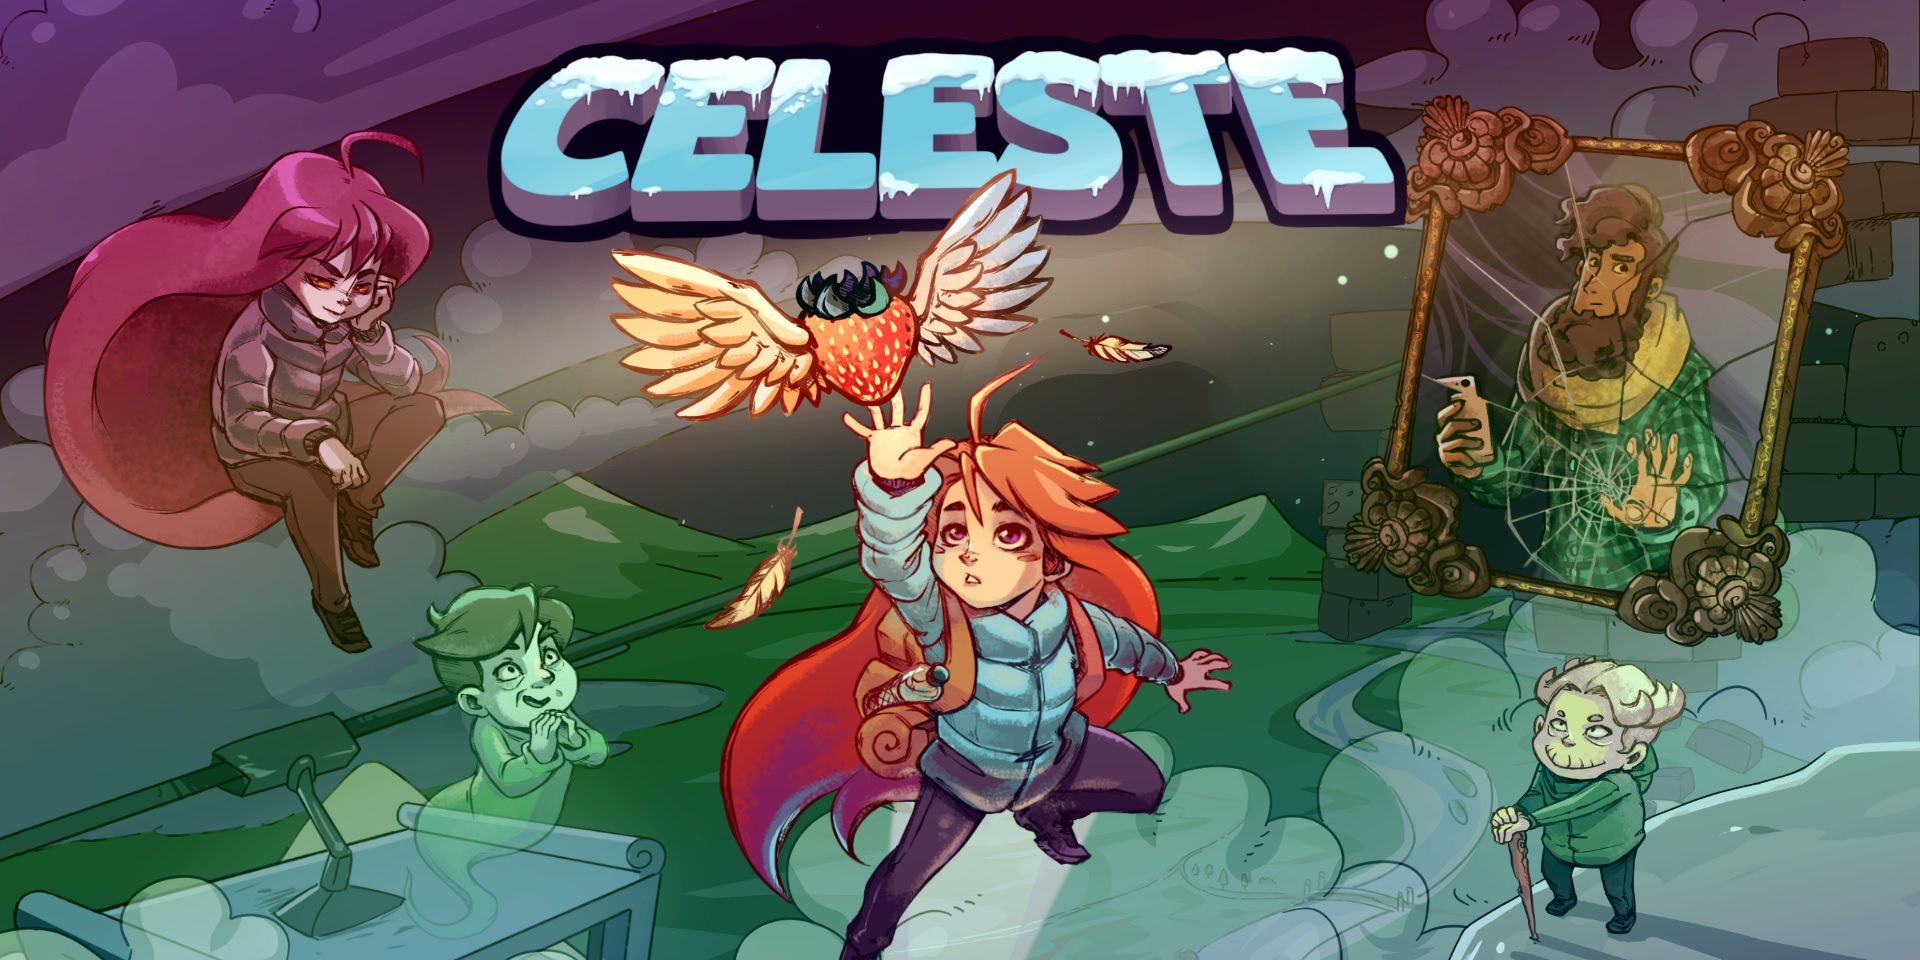 The title screen for platformer Celeste.